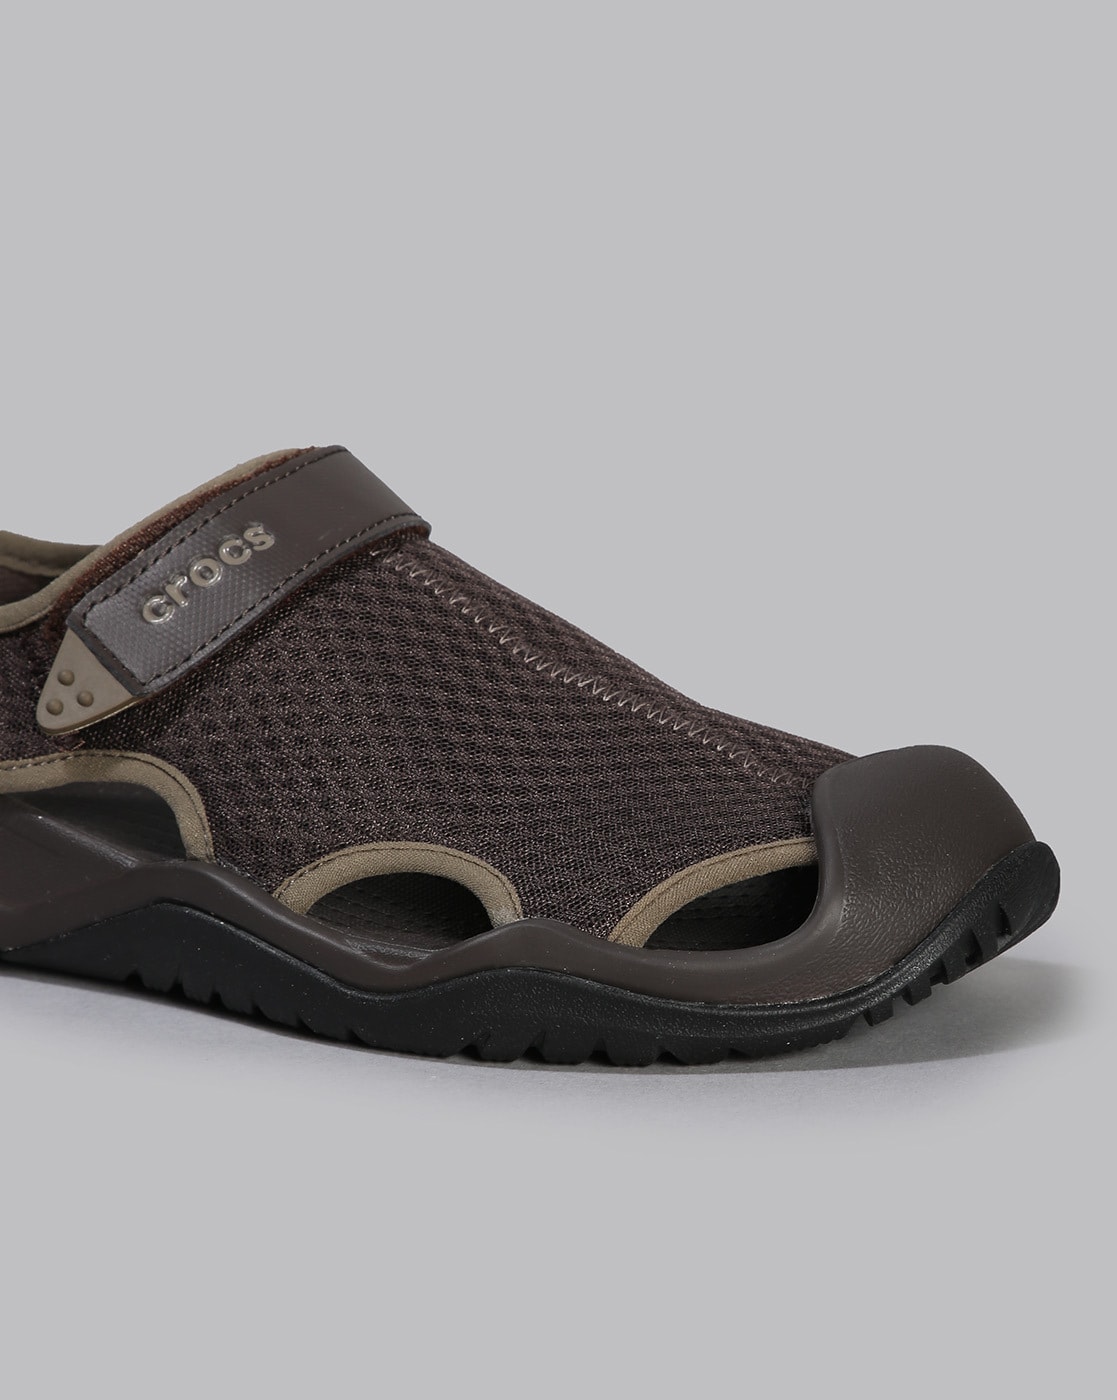 Crocs Men's Swiftwater Sandal M Espresso/Espresso Outdoor Sandals - M10  (15041-22Z): Buy Online at Low Prices in India - Amazon.in